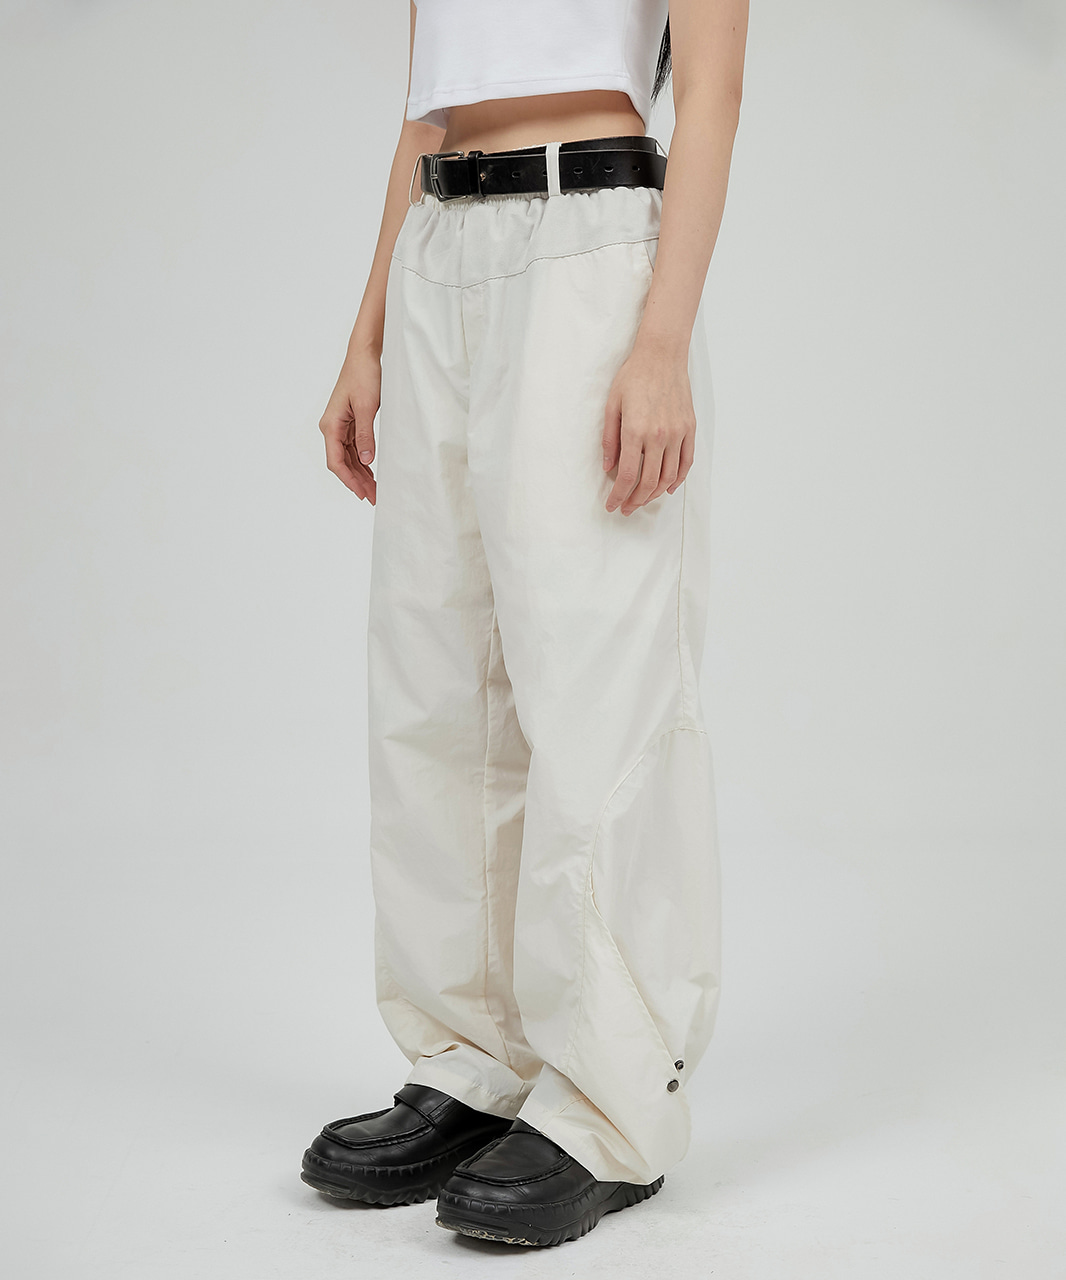 FLARE UP플레어업 Side Flap Pants - Cream (FL-219)